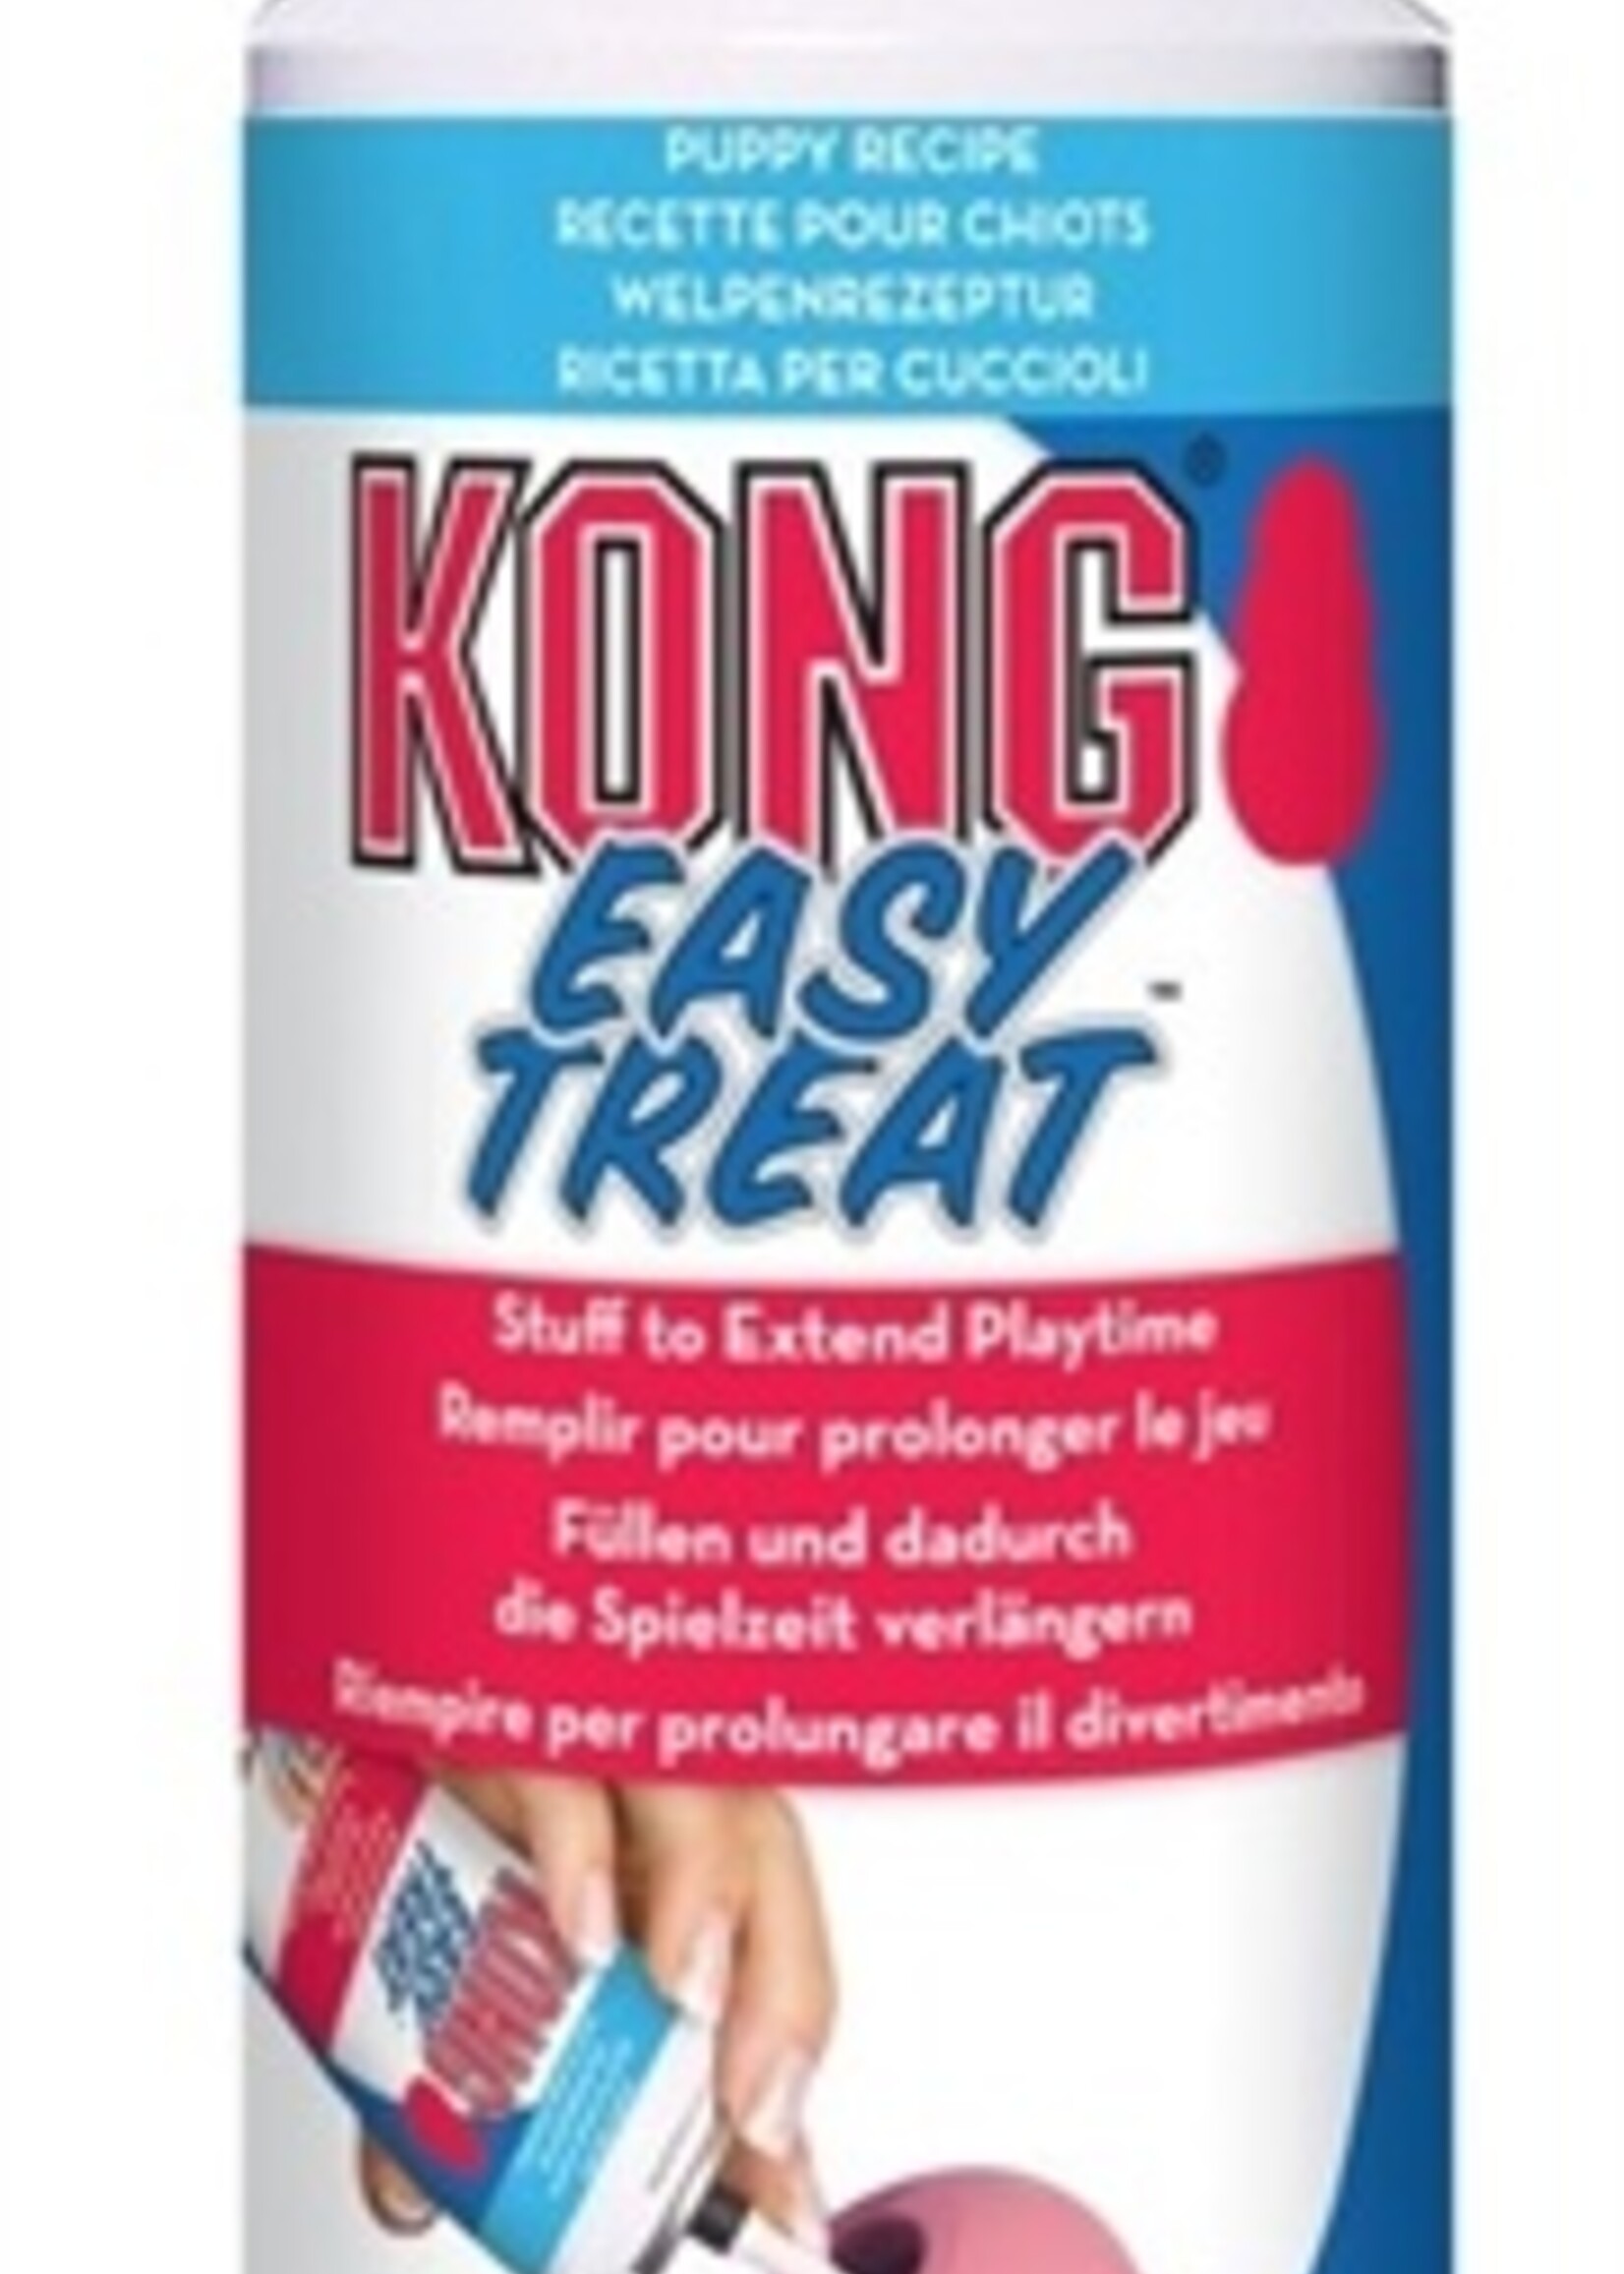 Kong Kong easy treat puppy